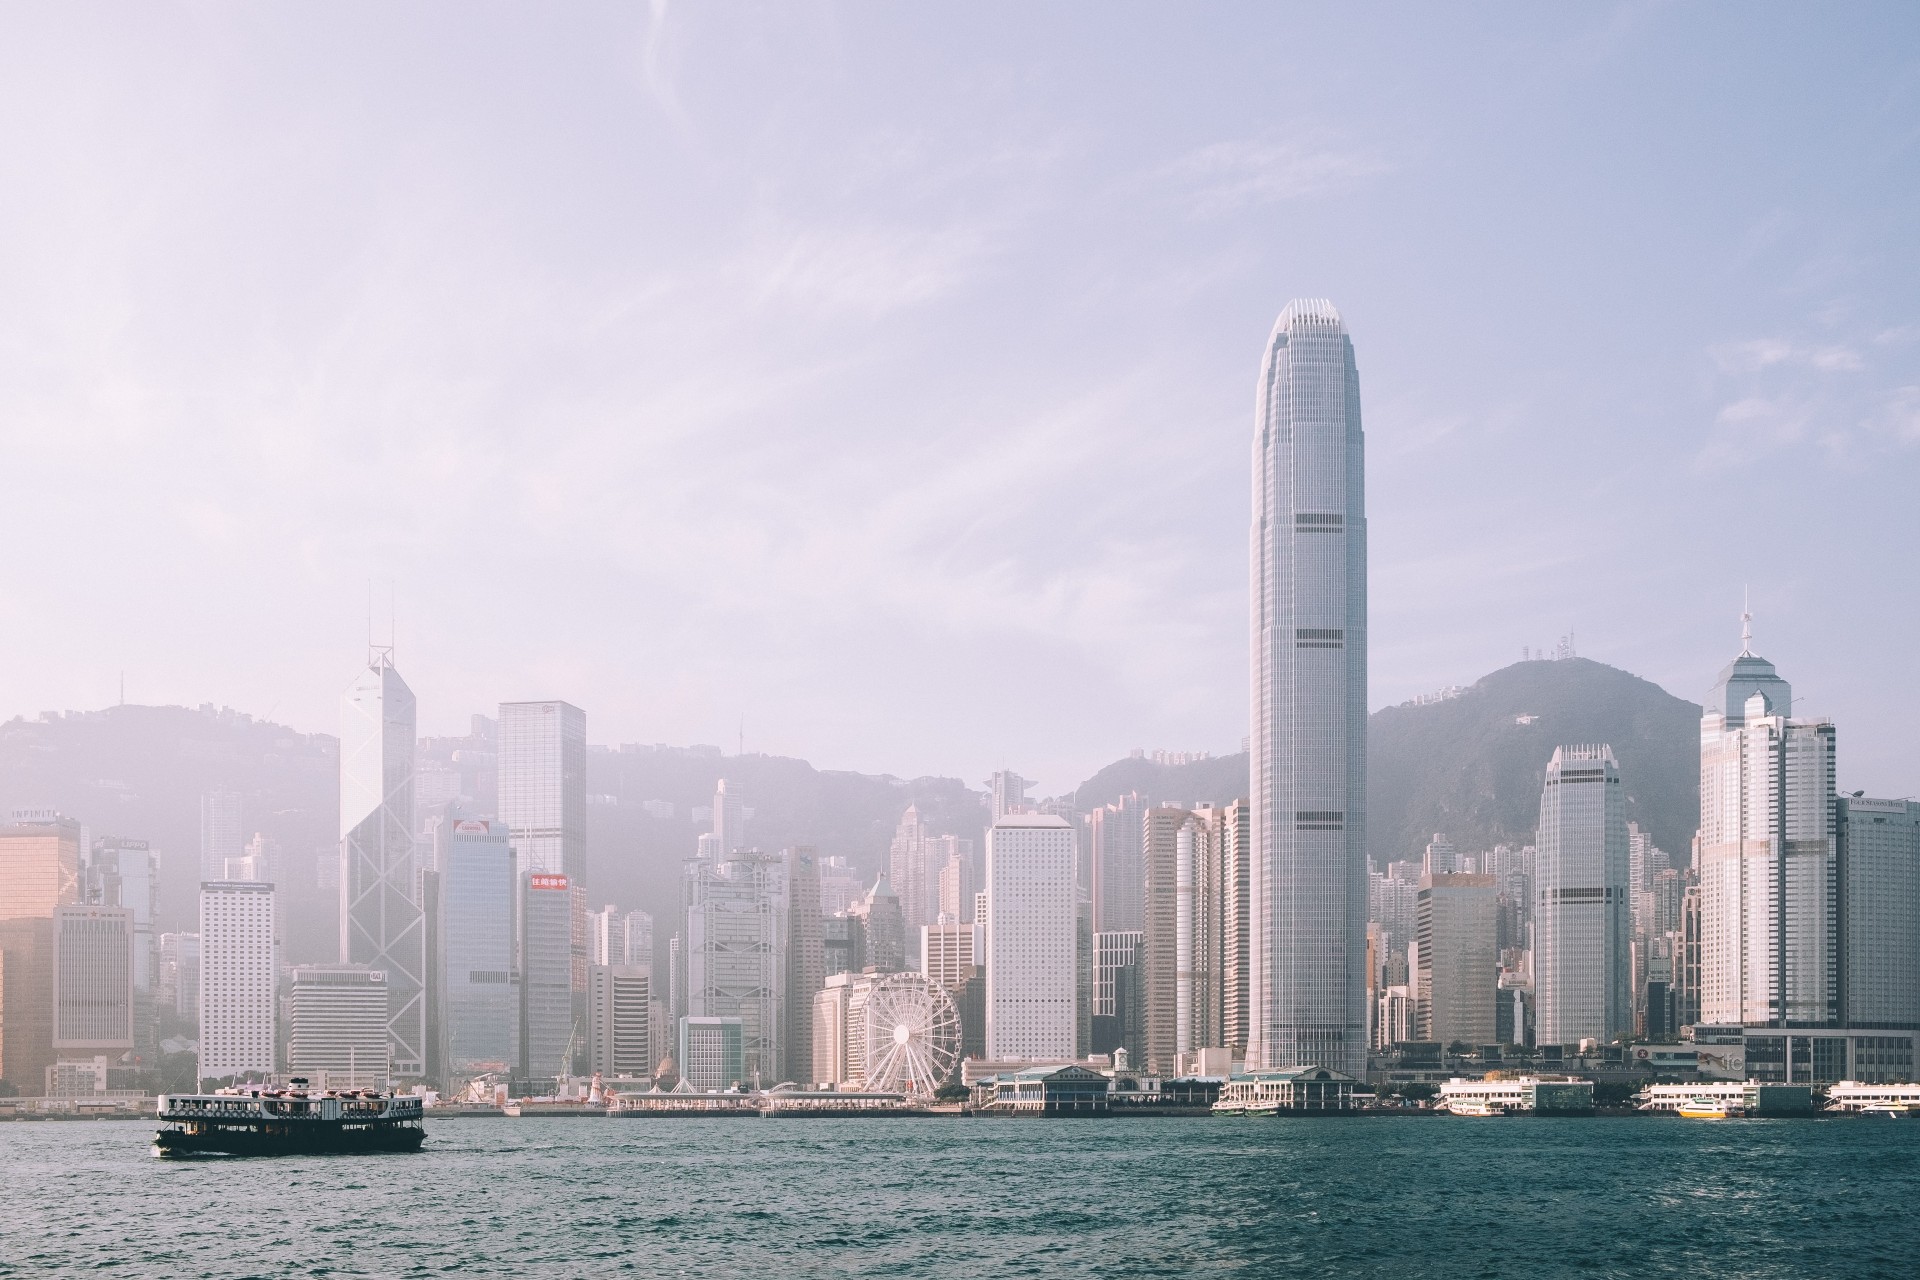 Hong Kong’s skyline. Photo: Dan Freeman
